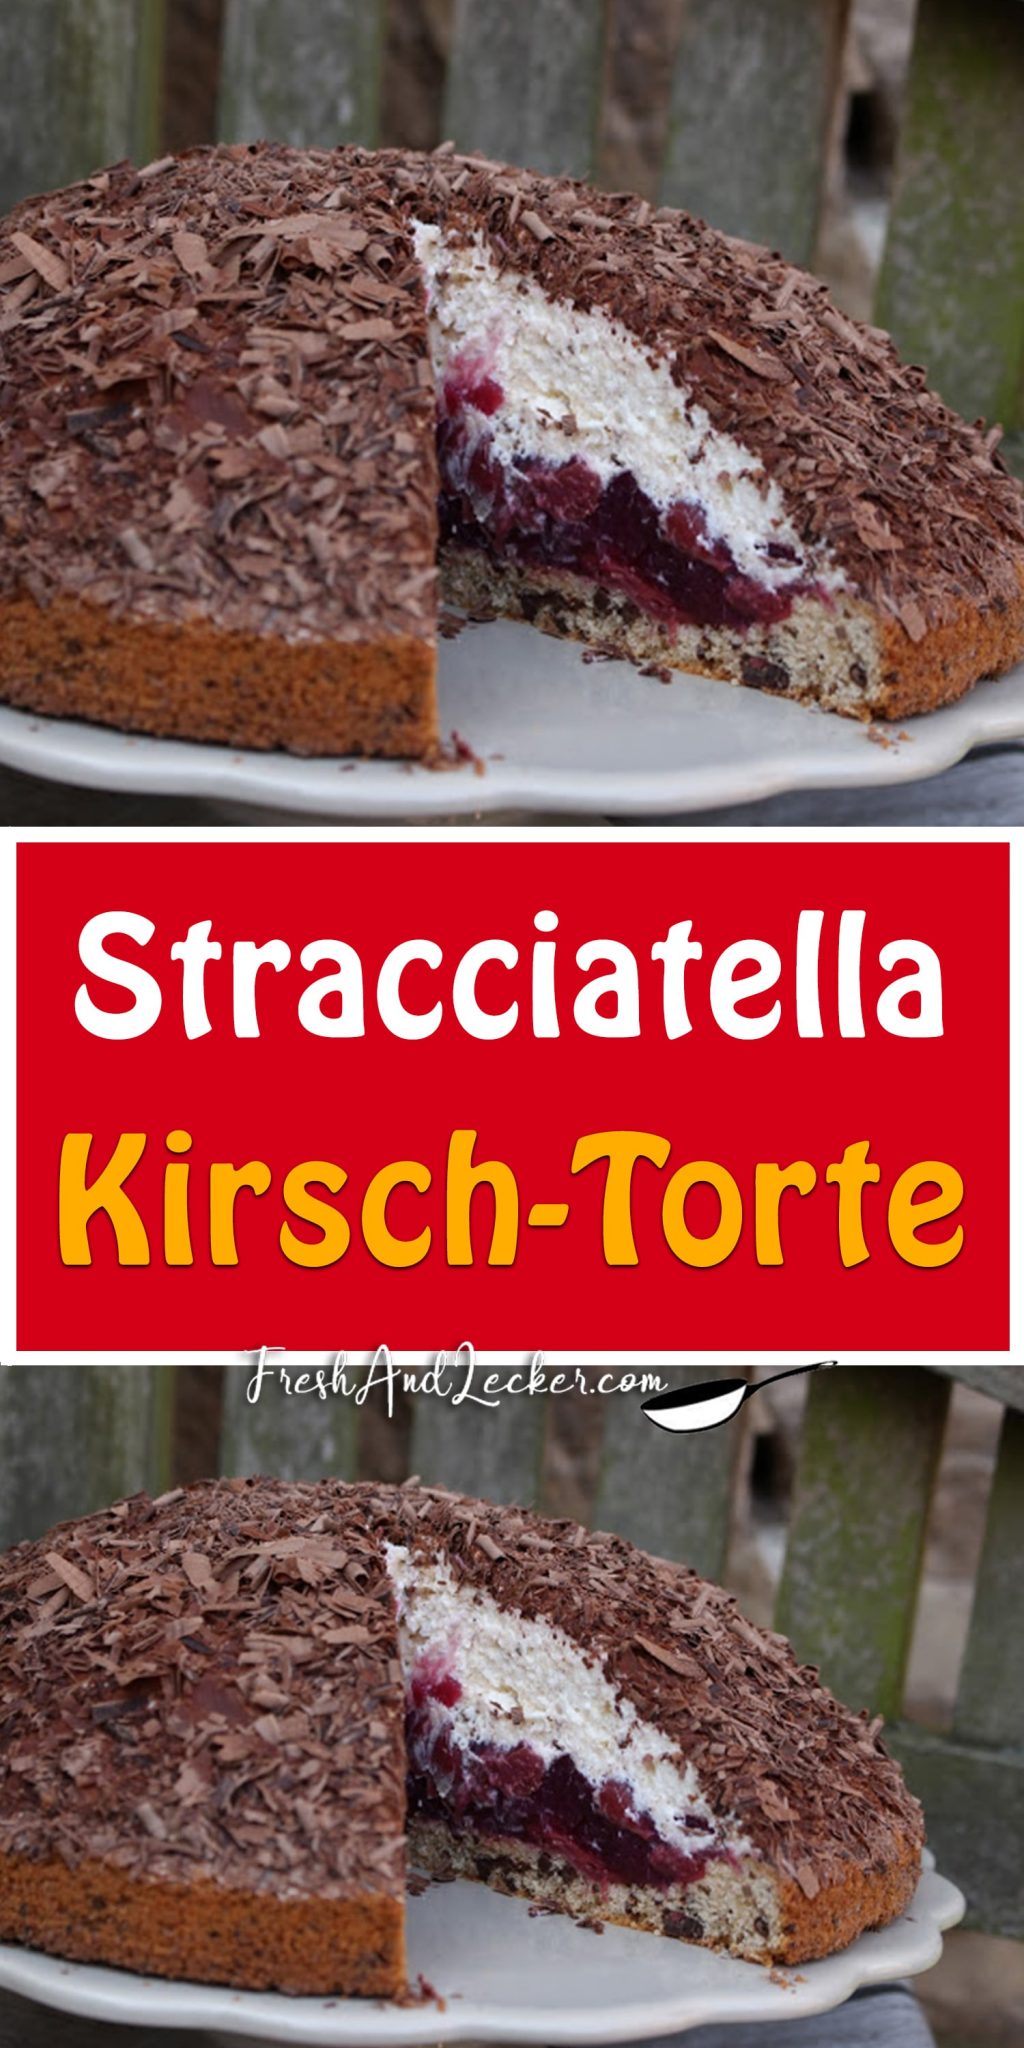 Stracciatella-Kirsch-Torte - Fresh Lecker